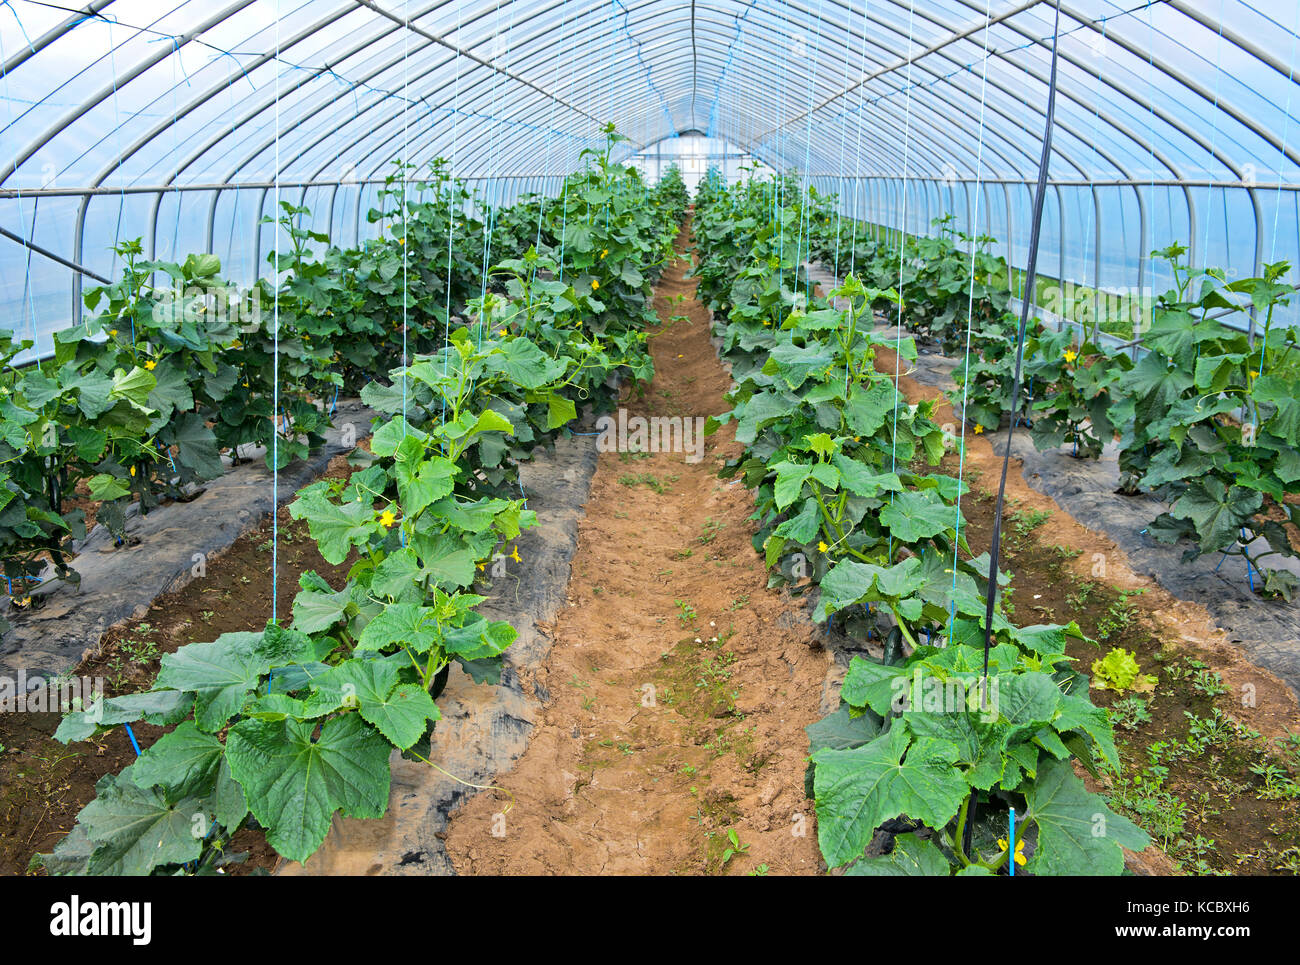 https://c8.alamy.com/comp/KCBXH6/cucumber-cultivation-in-the-foil-tunnel-everyday-farm-llc-songino-KCBXH6.jpg